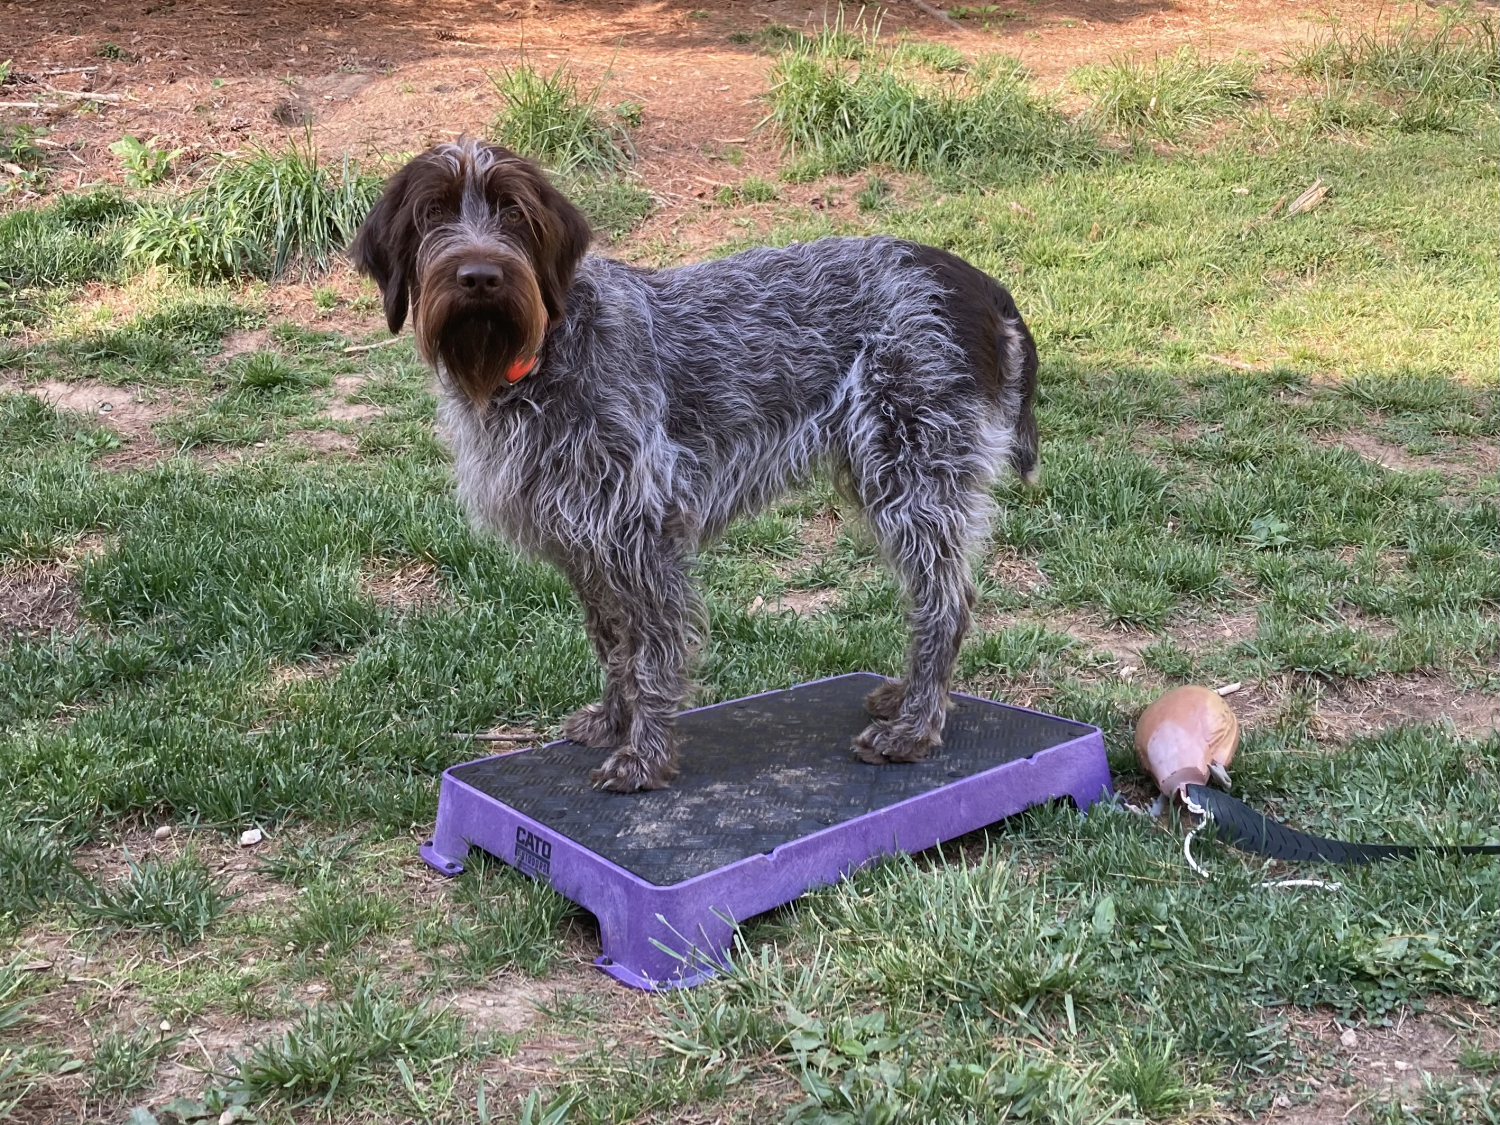 Cato Board Dog Training Place Board – Cato Outdoors